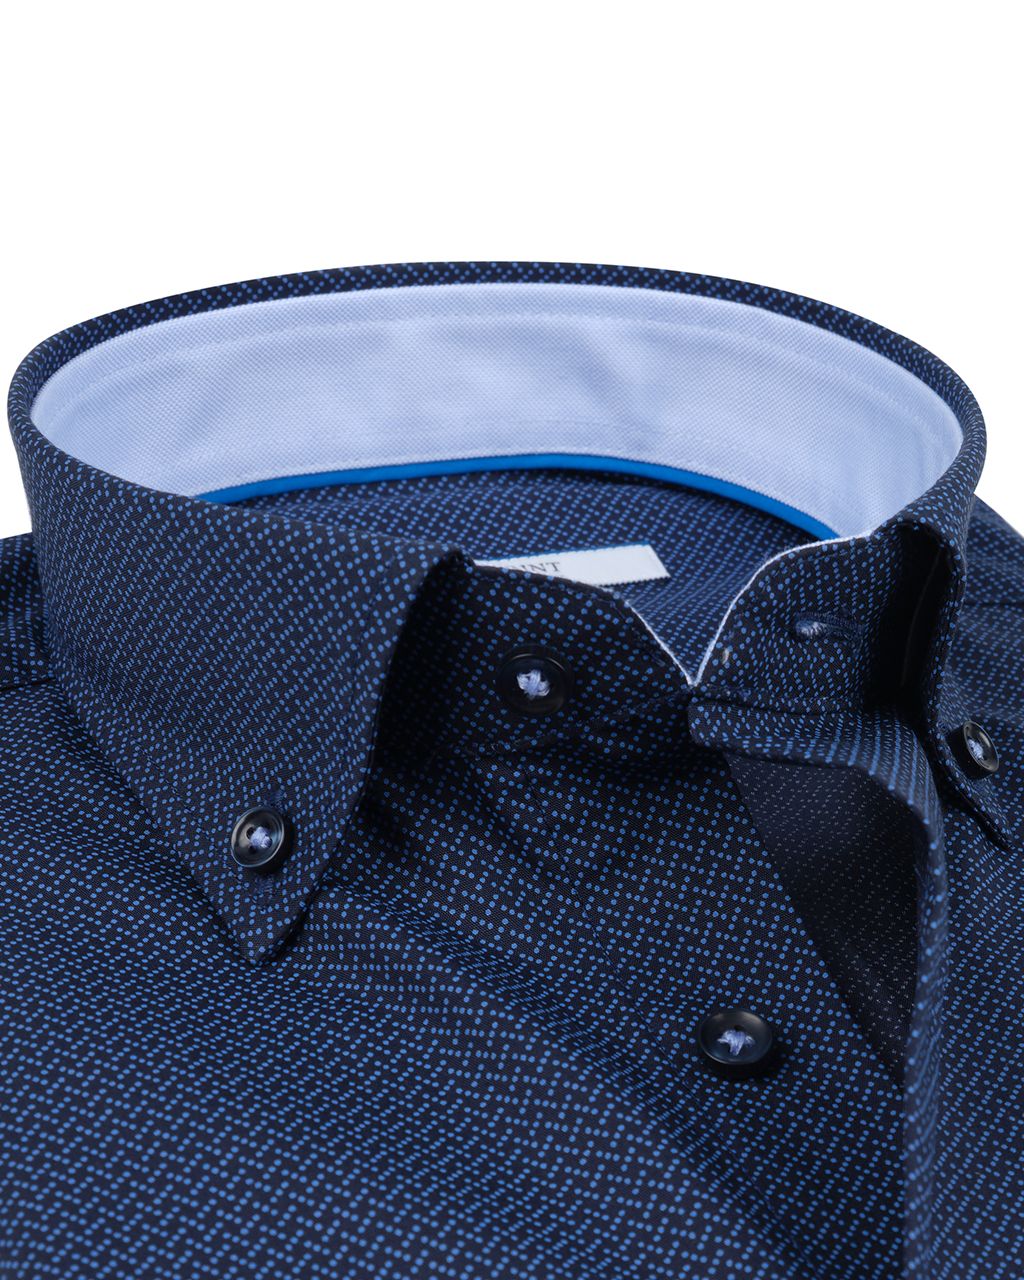 The BLUEPRINT Premium Trendy Overhemd LM Donkerblauw dessin 078410-001-L